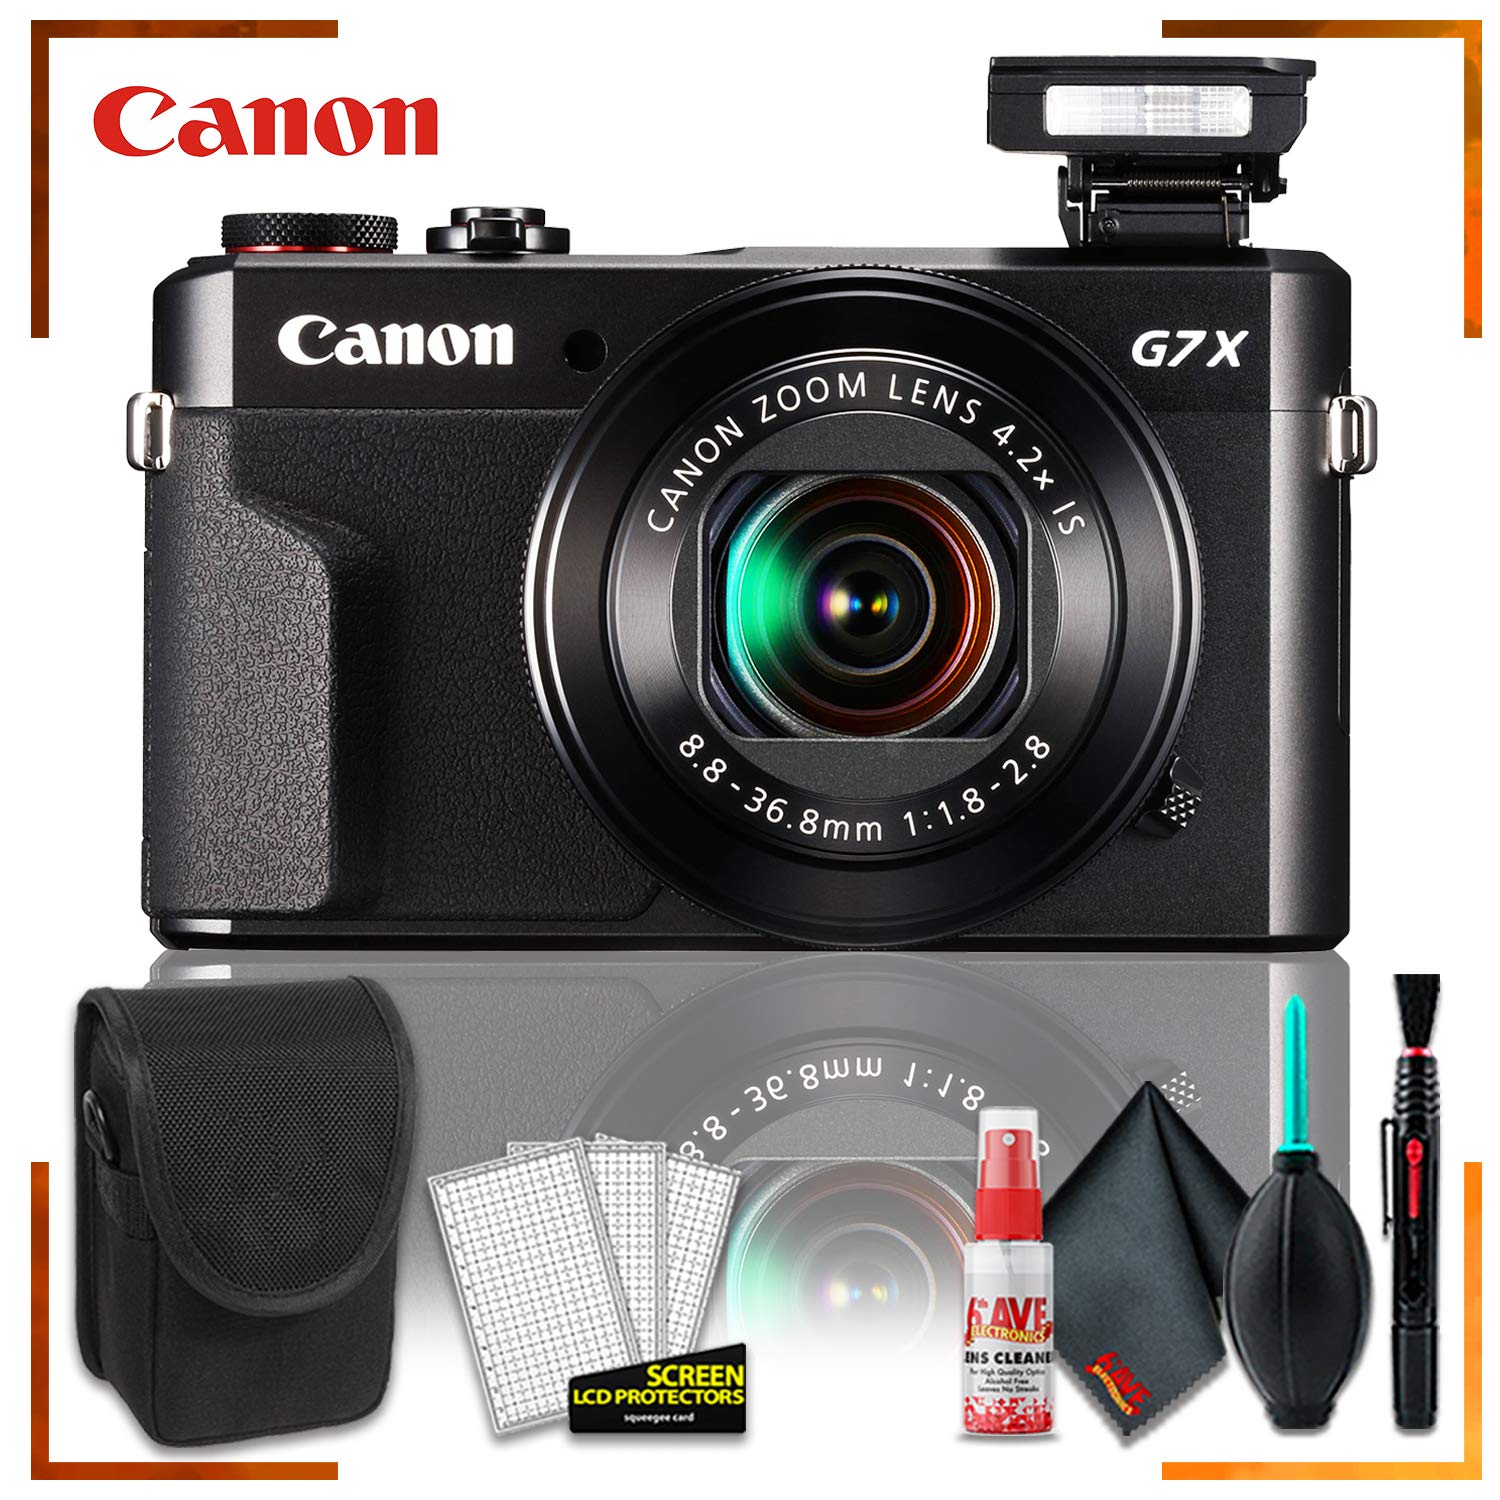 Canon PowerShot G7 X Mark II Digital Camera (Intl Model) + Camera Case + Cleaning Kit